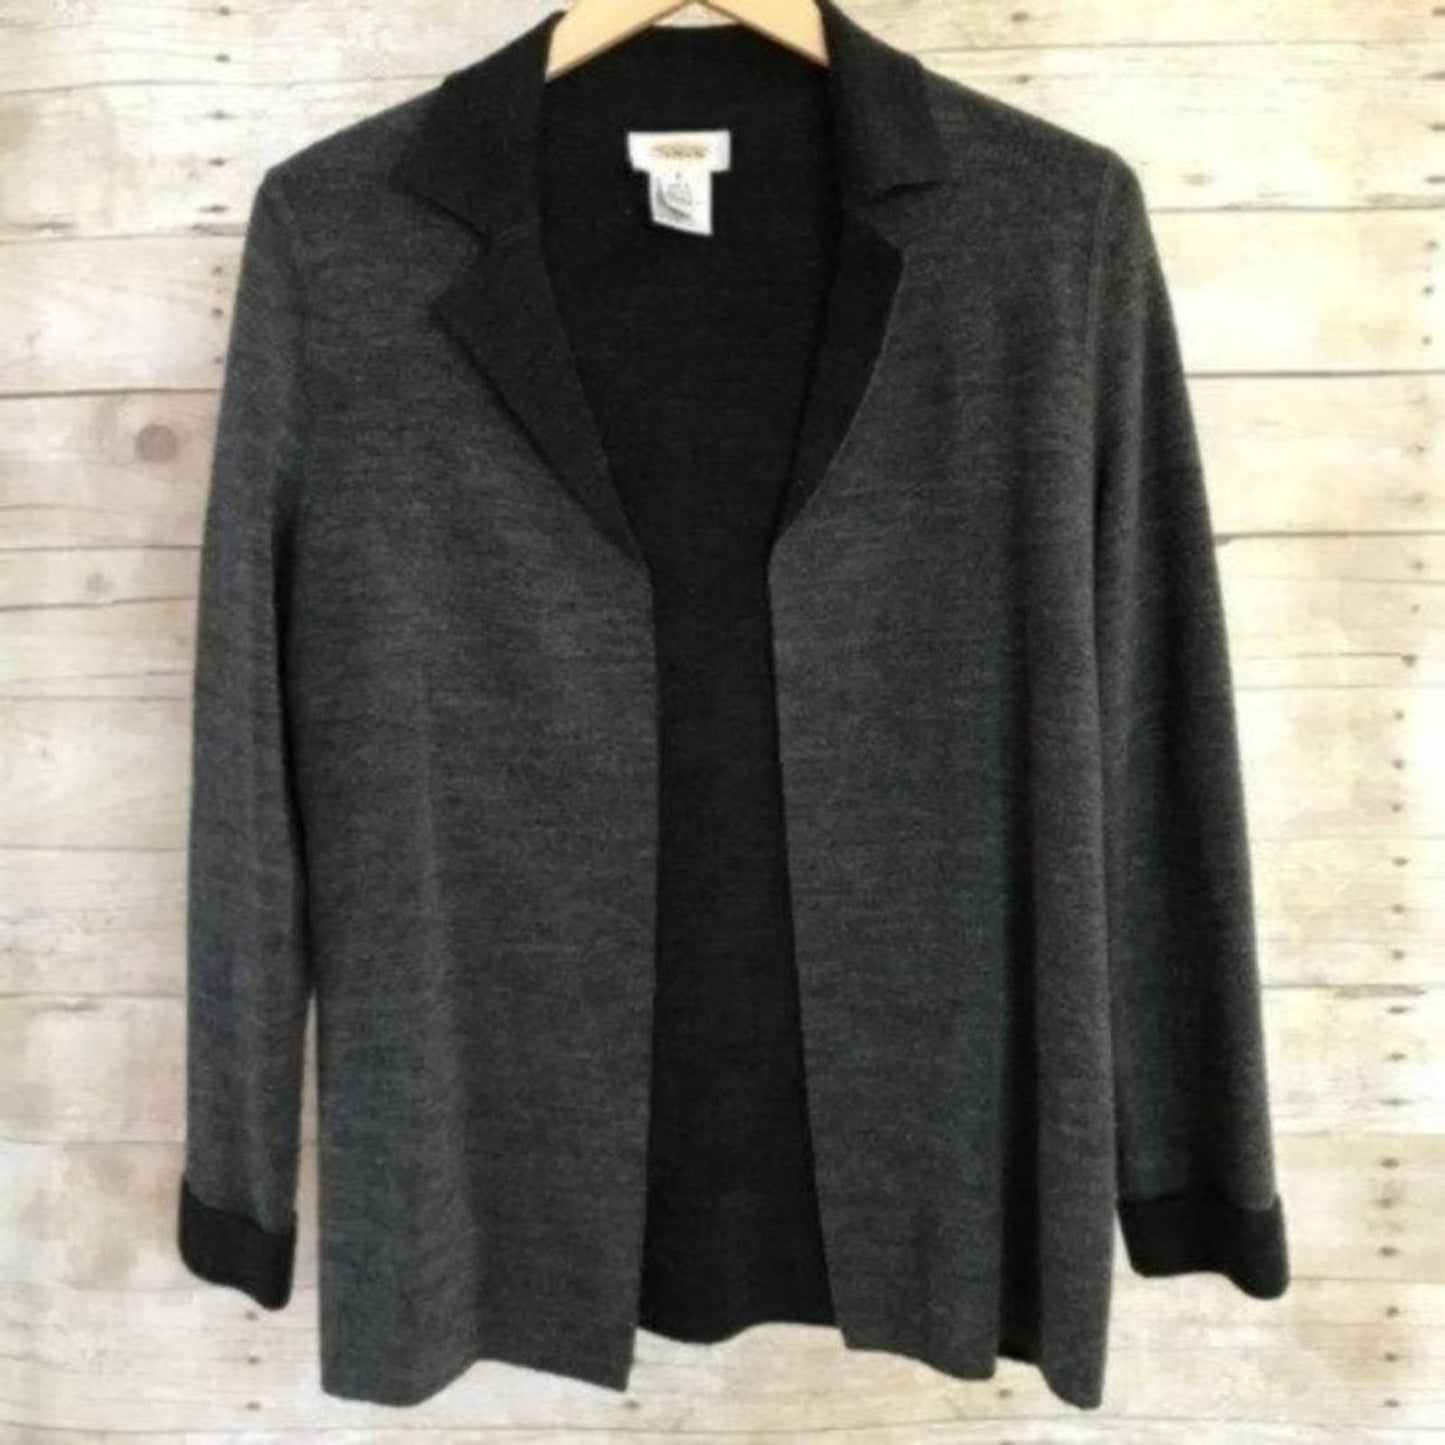 Vintage Talbots Merino Wool Sweater Dress & Matching Jacket Suit Set Gray Black Size S